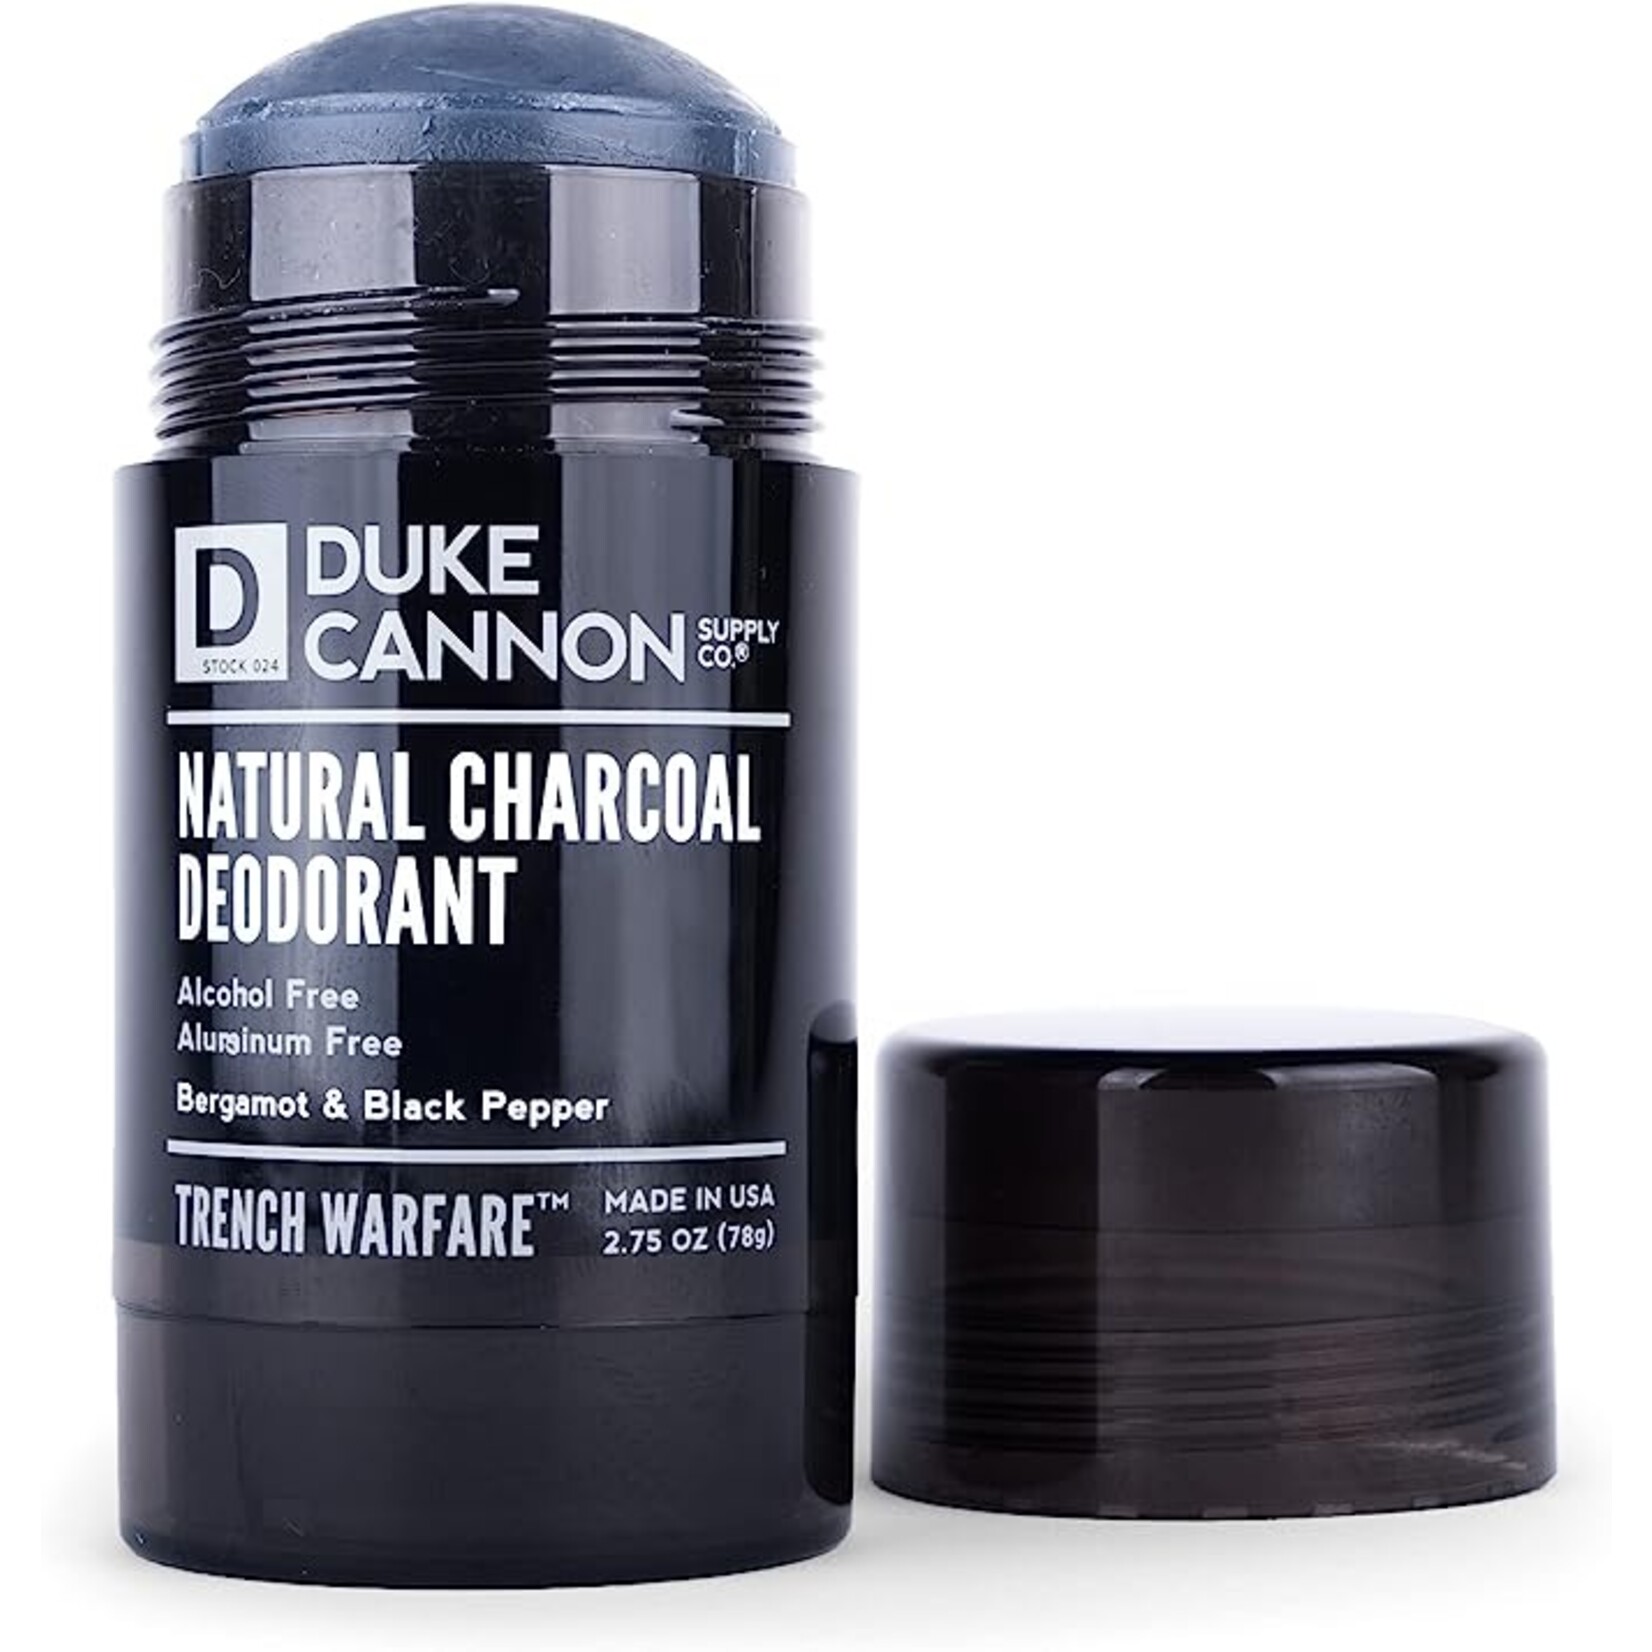 Duke Cannon Supply Co. Duke Cannon Natural Charcoal Deodorant Bergamot & Black Pepper